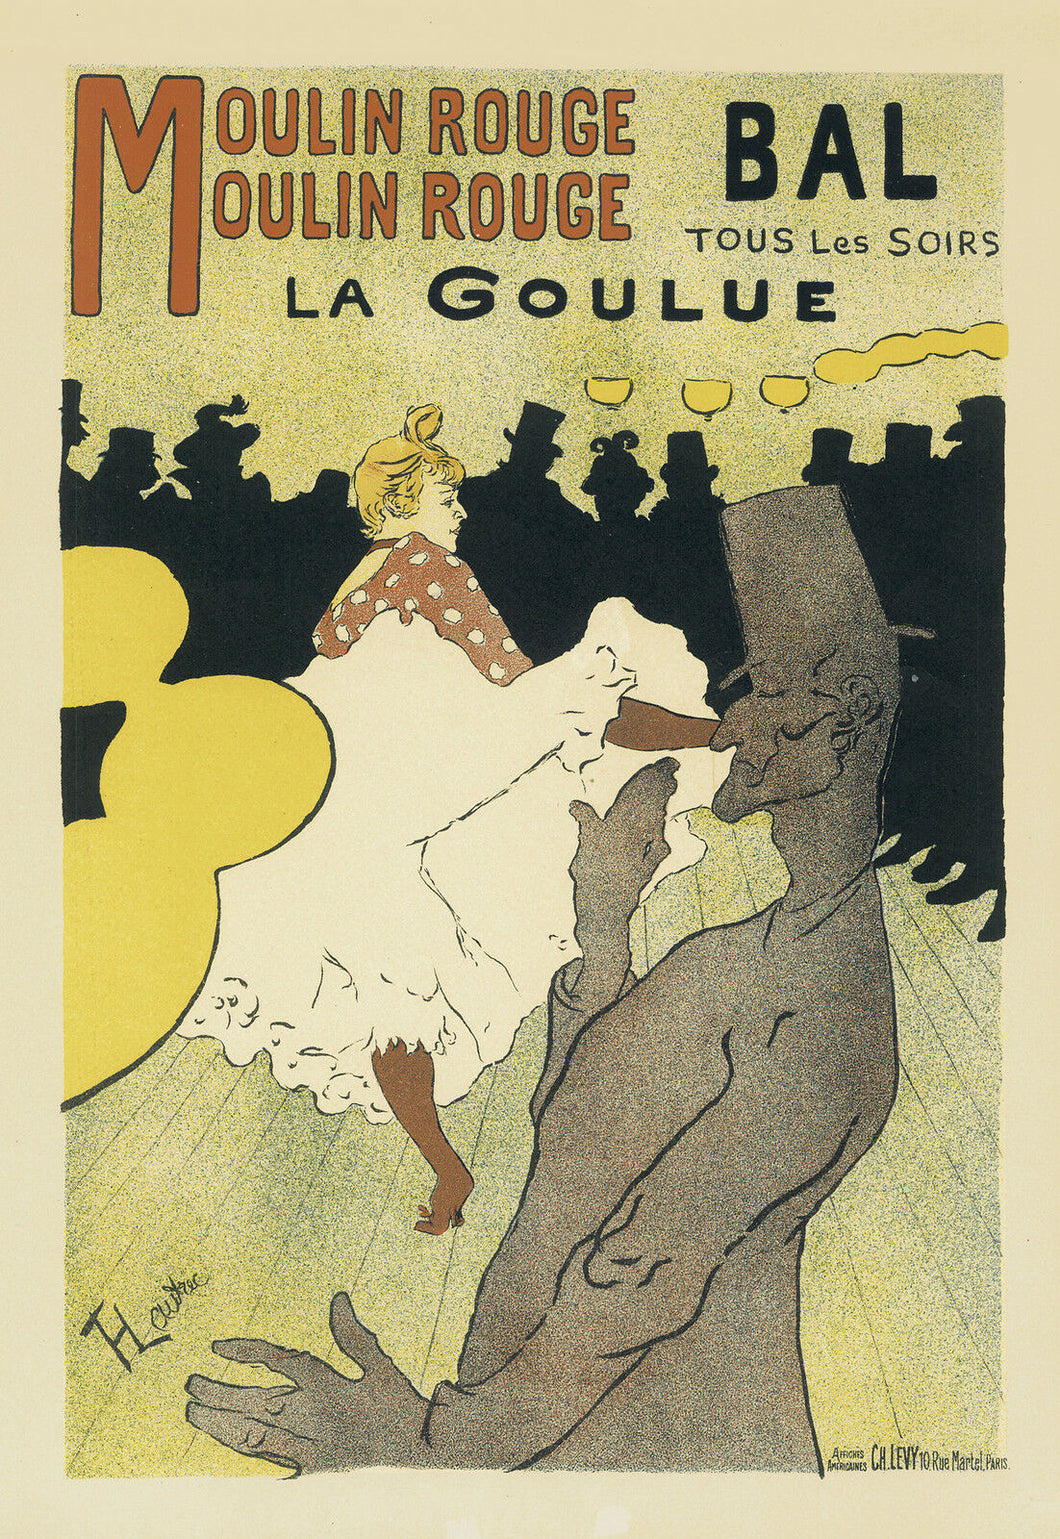 Moulin Rouge by Toulouse Latrec Poster A3 / A2 Print